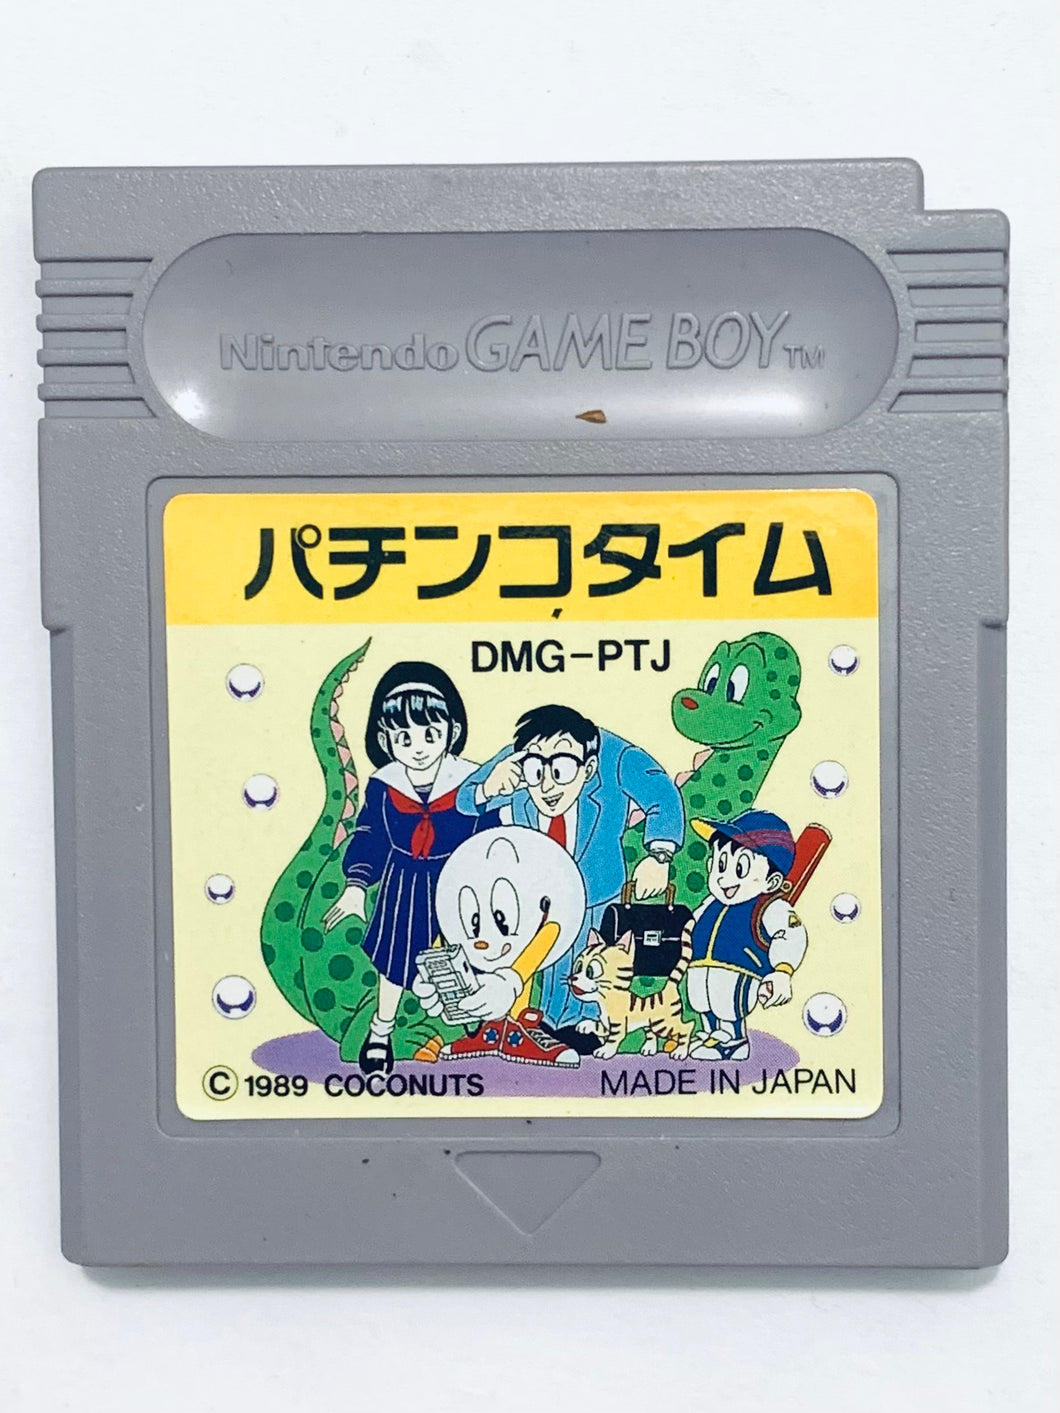 Pachinko Time - GameBoy - Game Boy - Pocket - GBC - GBA - JP - Cartridge (DMG-PTJ)